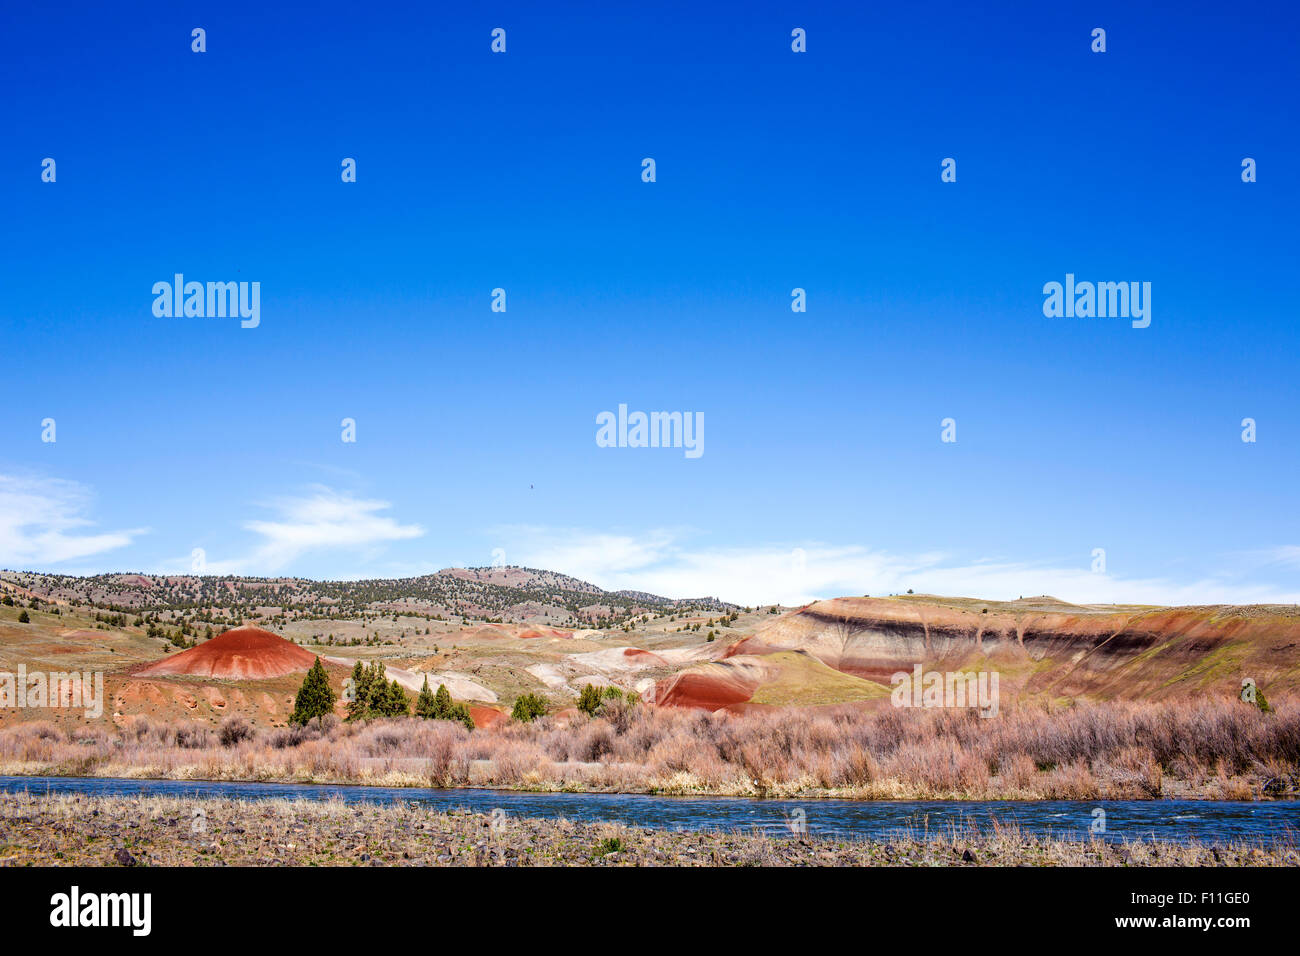 Creek near hills in desert landscape under blue sky, Painted Hills, Oregon, United States Stock Photo